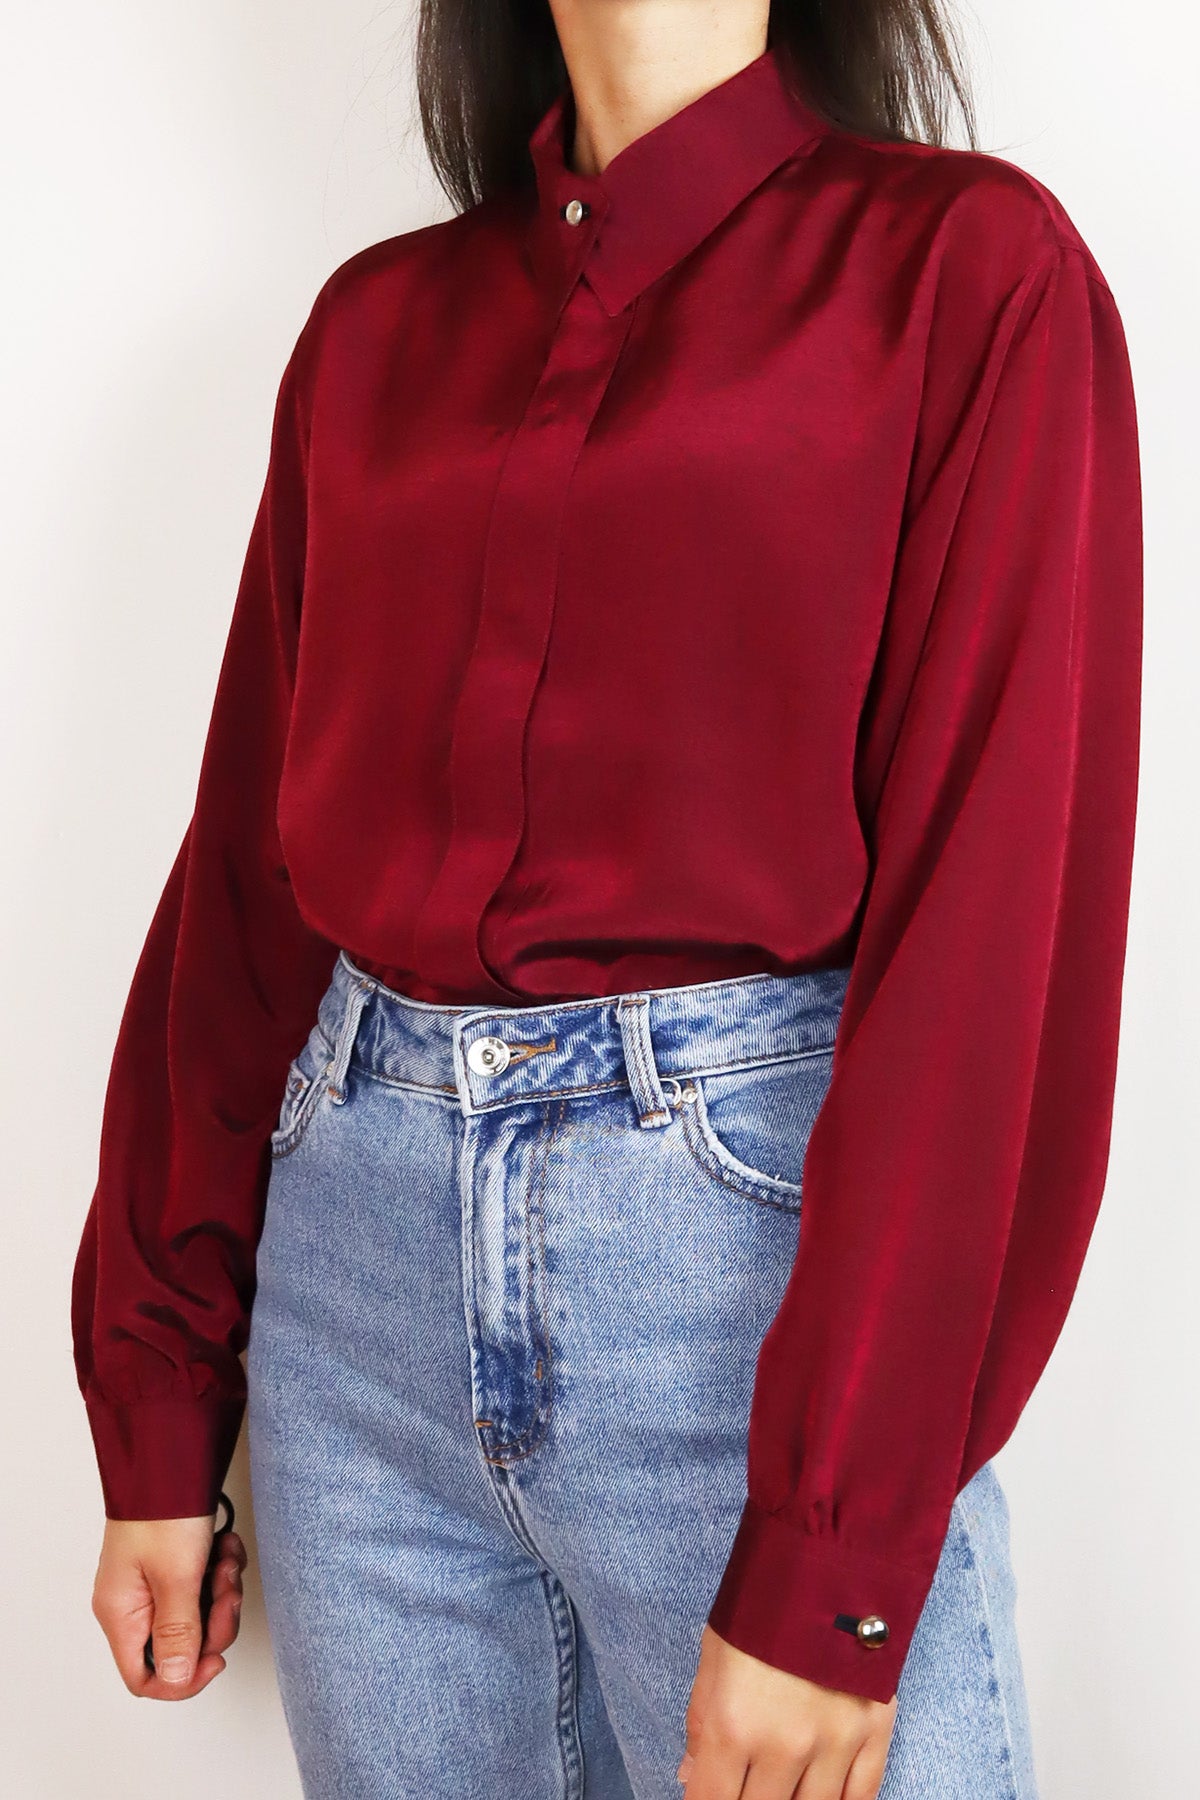 Bluse Vintage Rot Glänzend ( Gr. M )